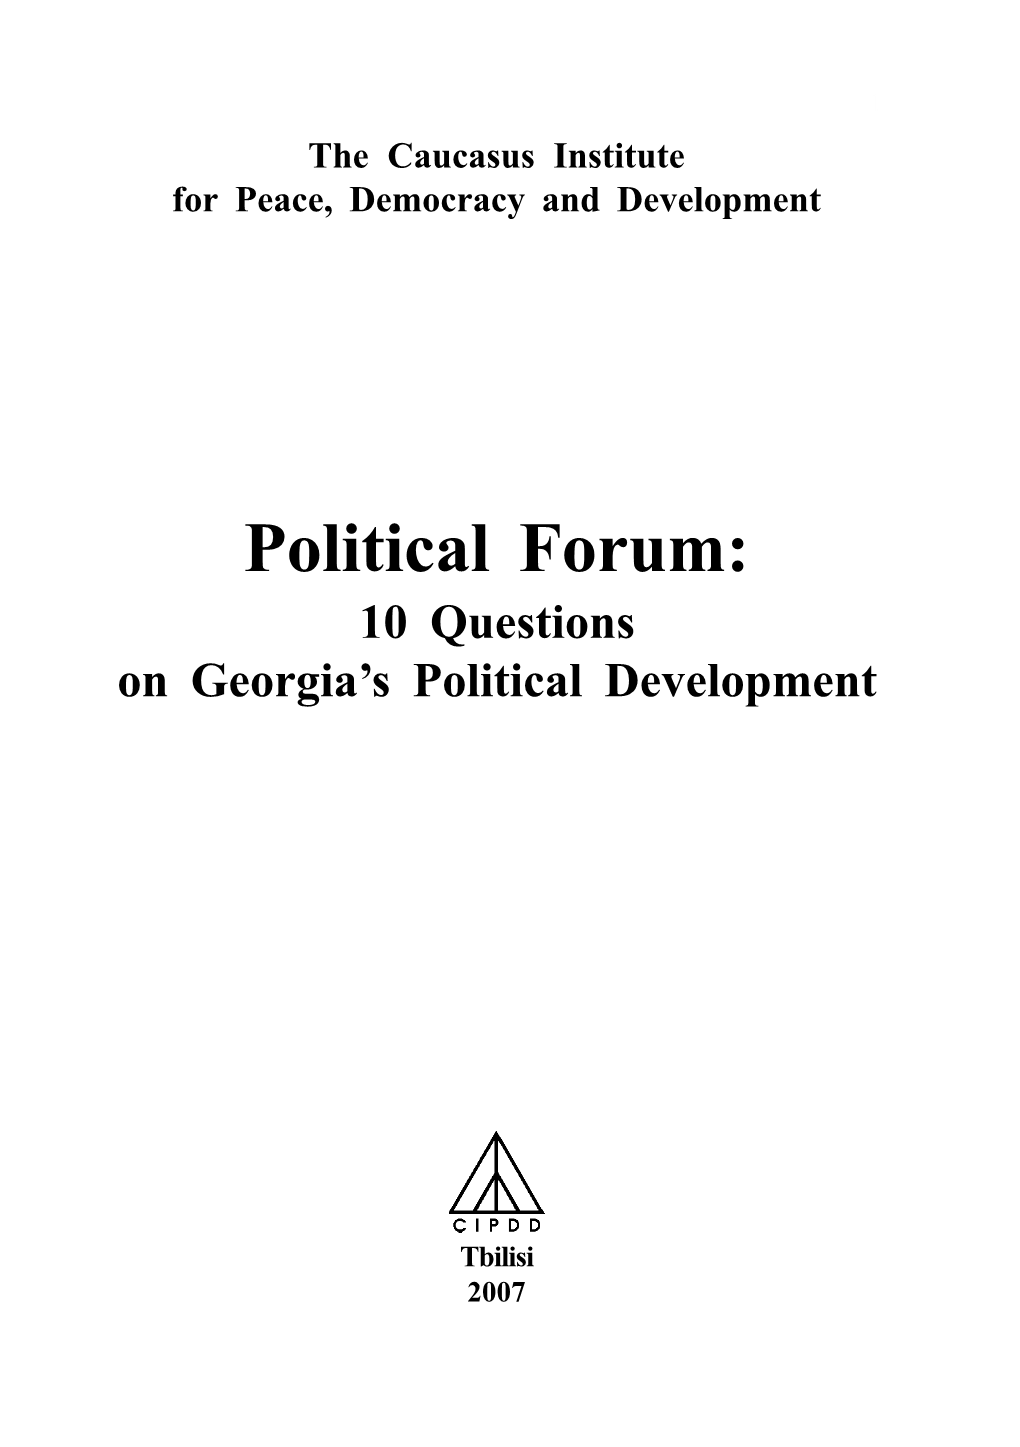 Political Forum: 10 Questions on Georgia's Political Development